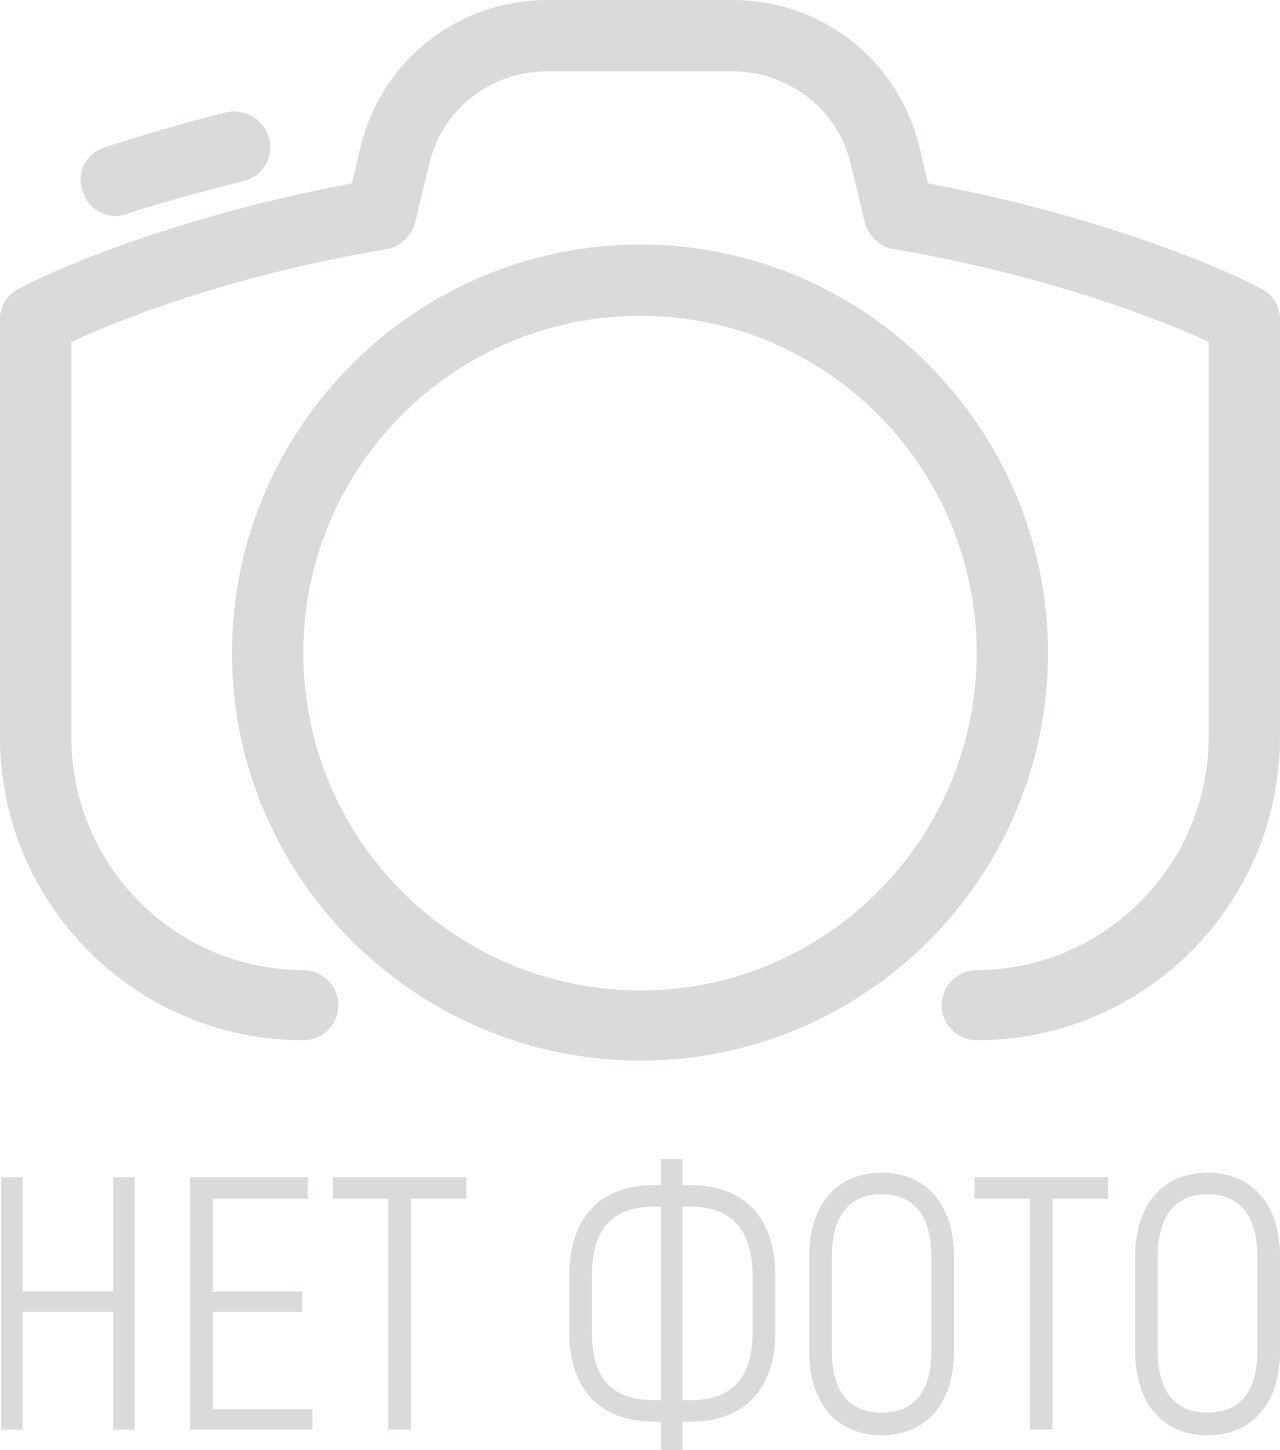 Логотип в текст.jpg